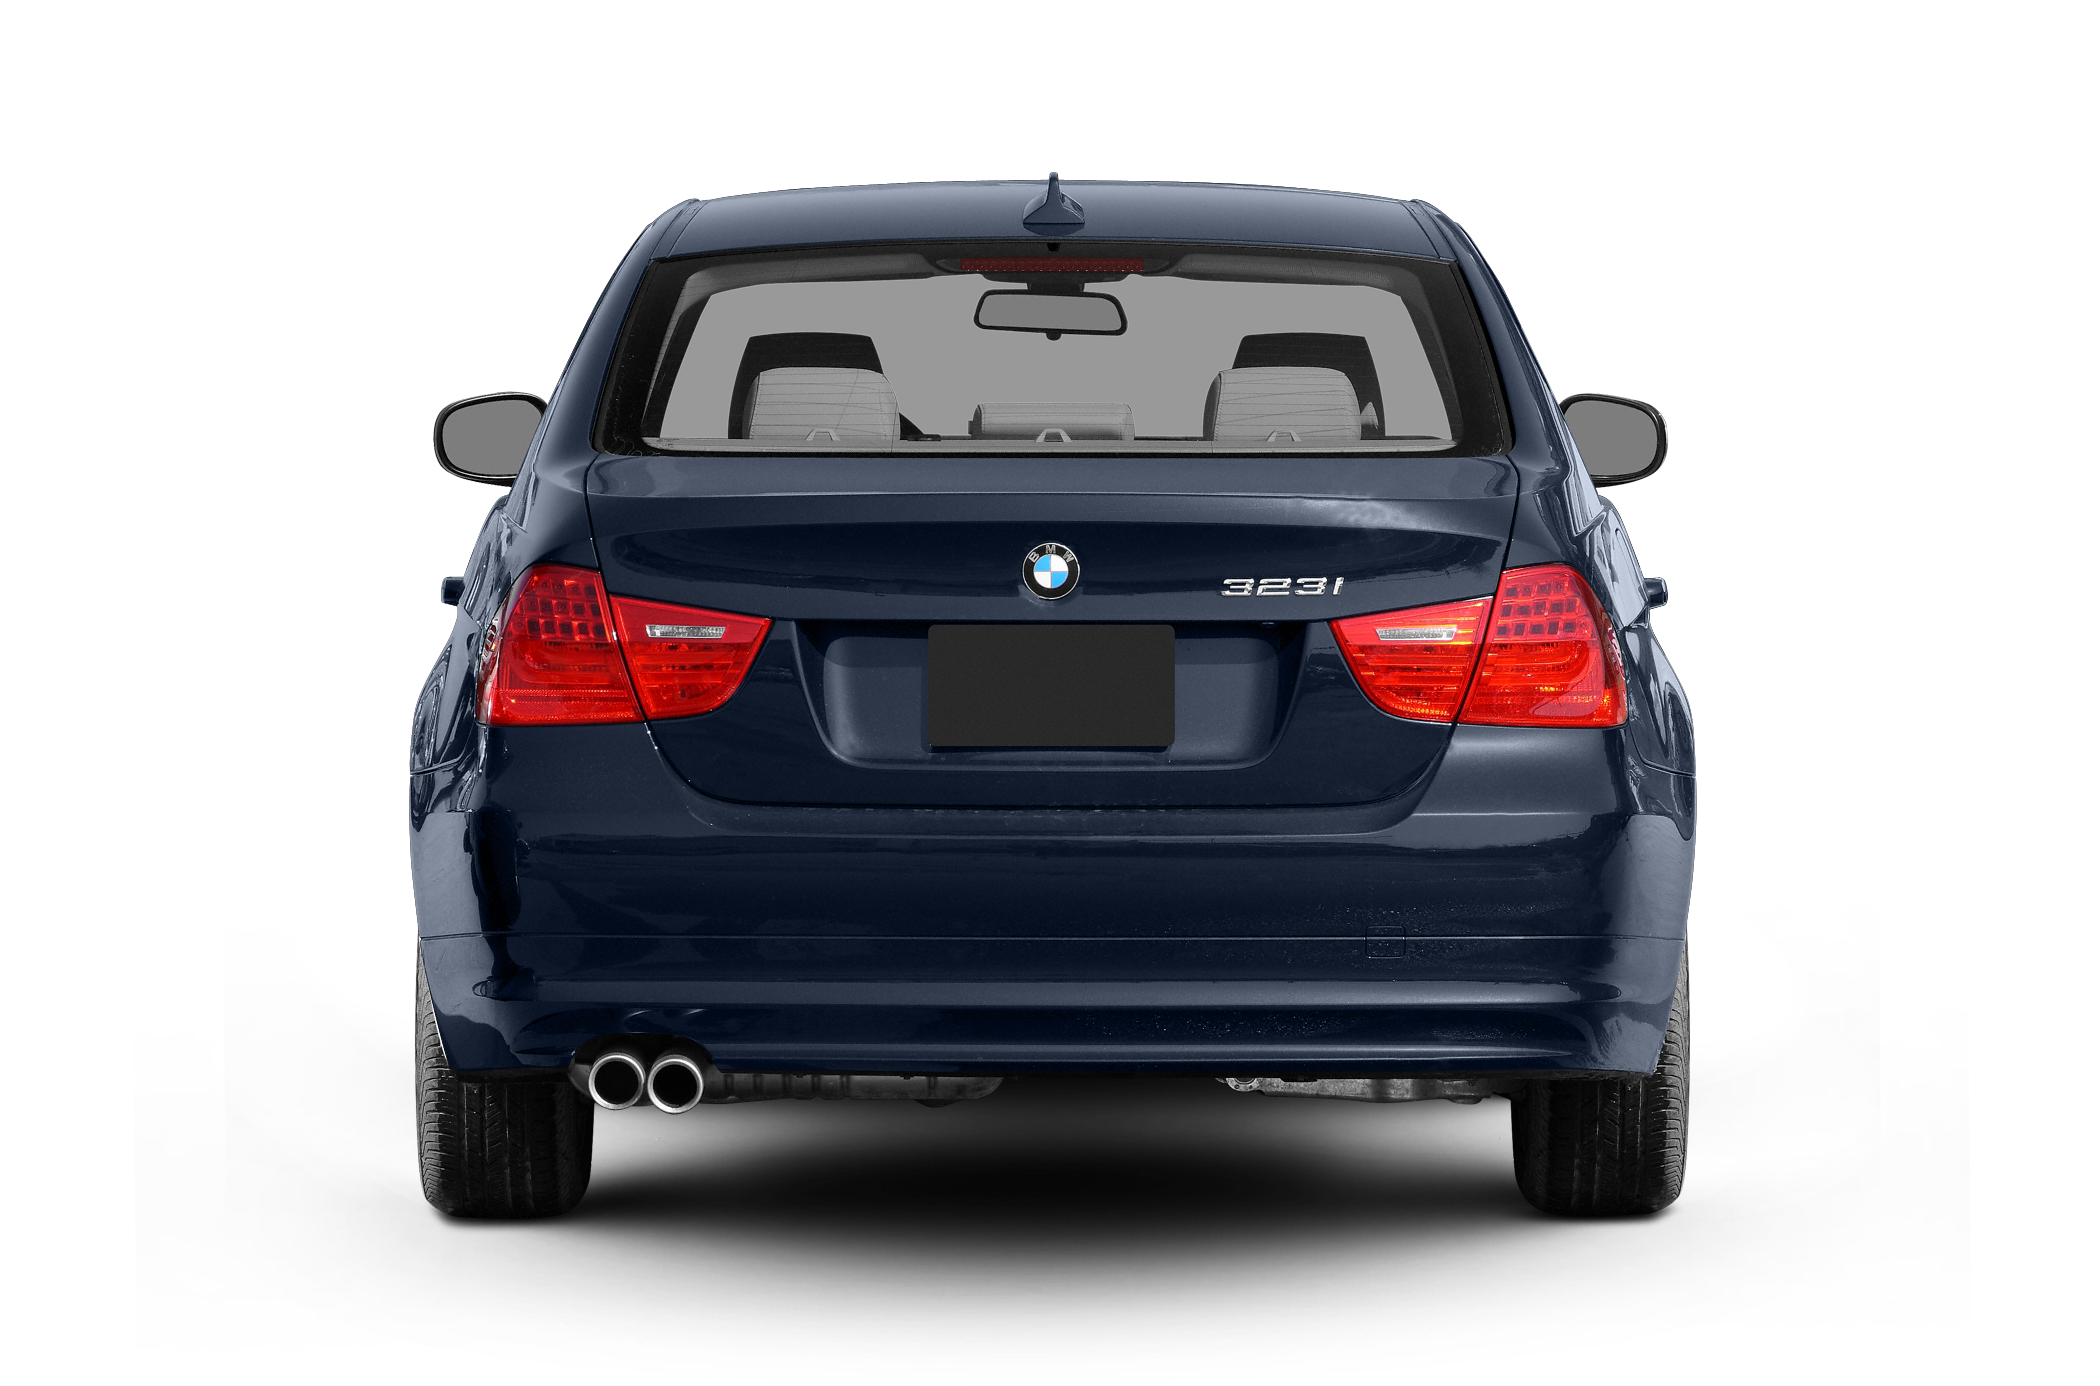 2011 BMW 335